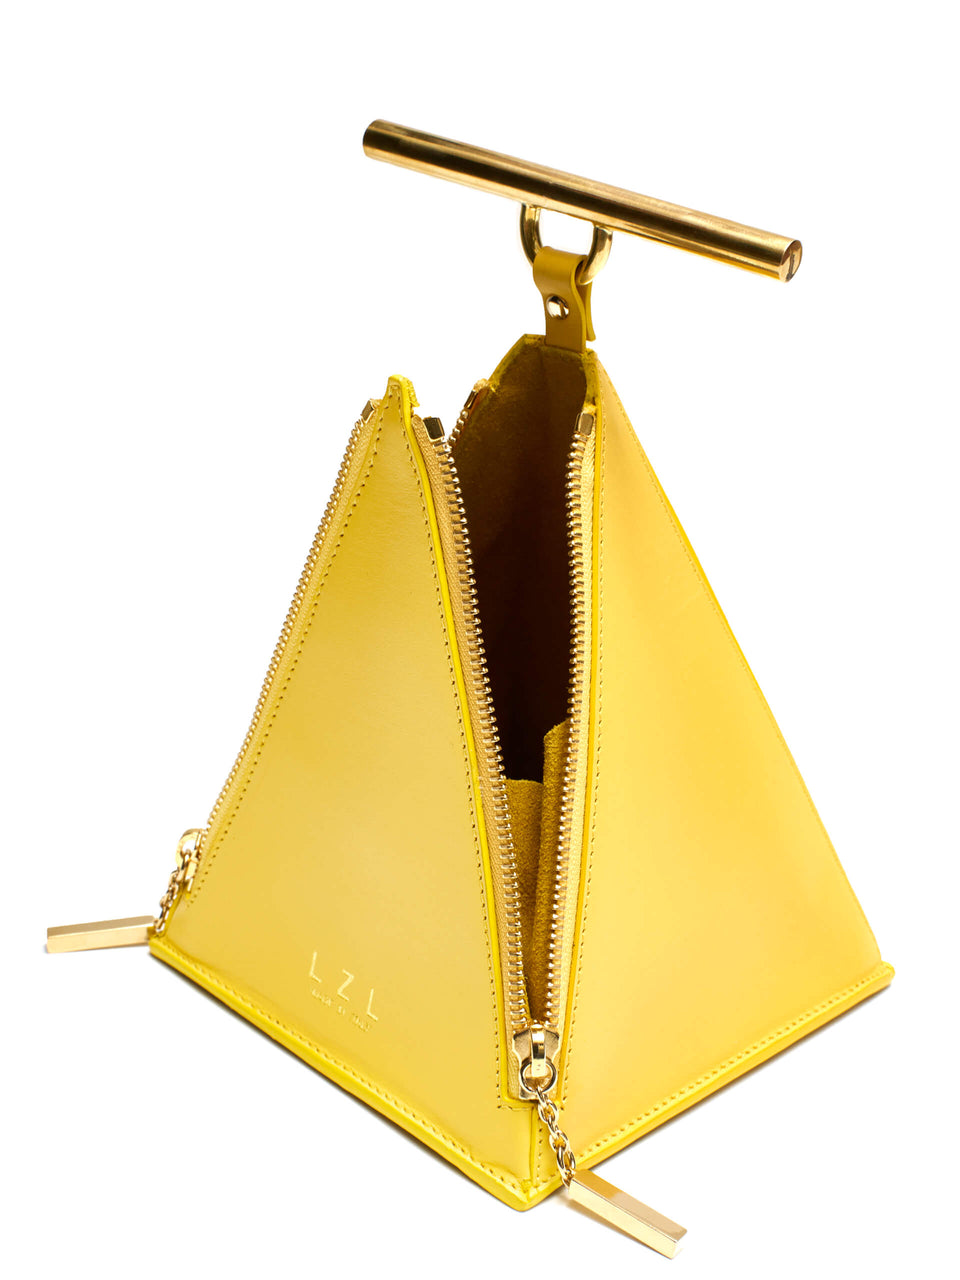 LZL Pyramid Bag 002 Yellow - Inside